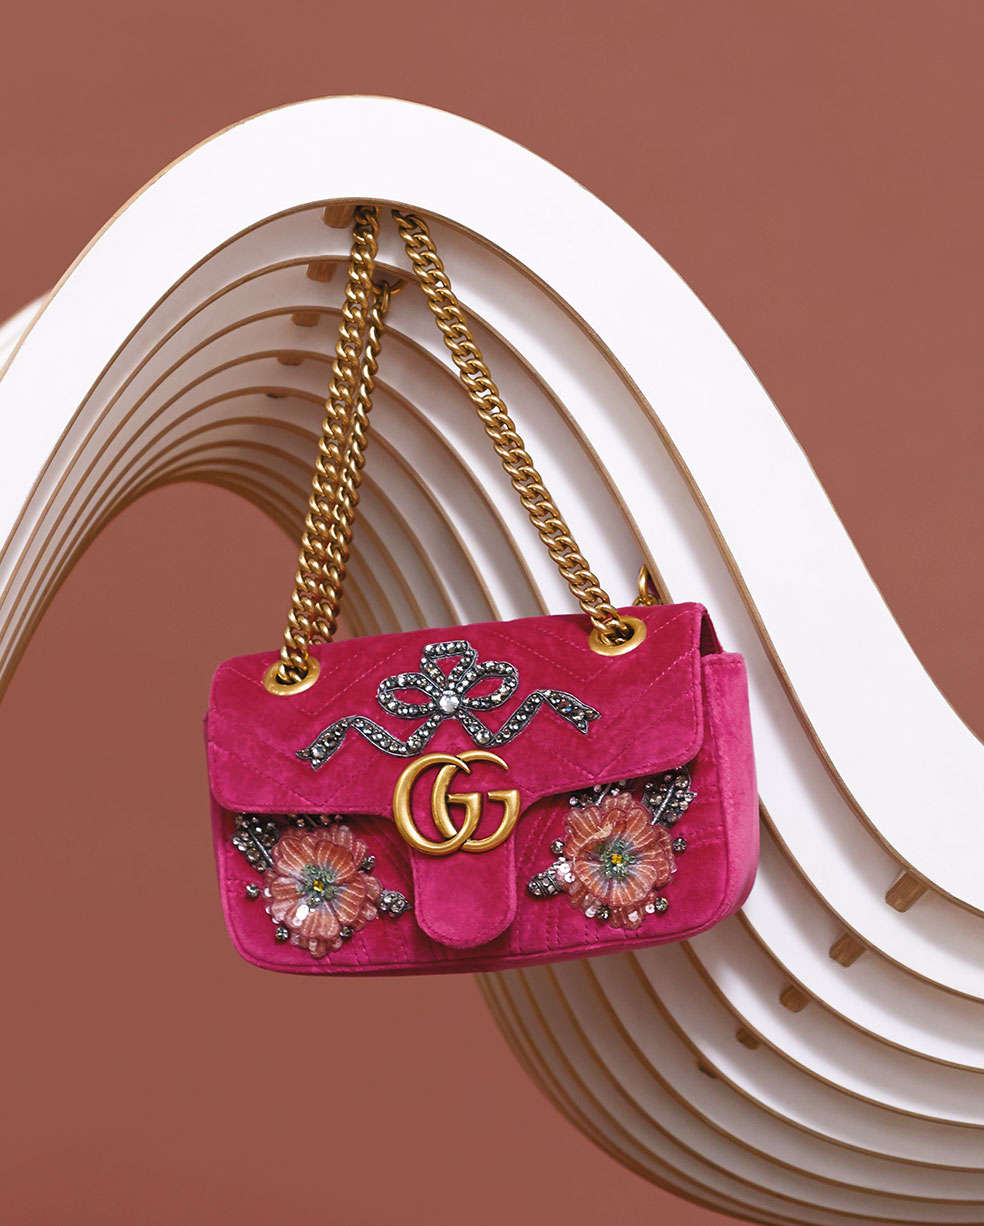 A Gucci Marmont bag